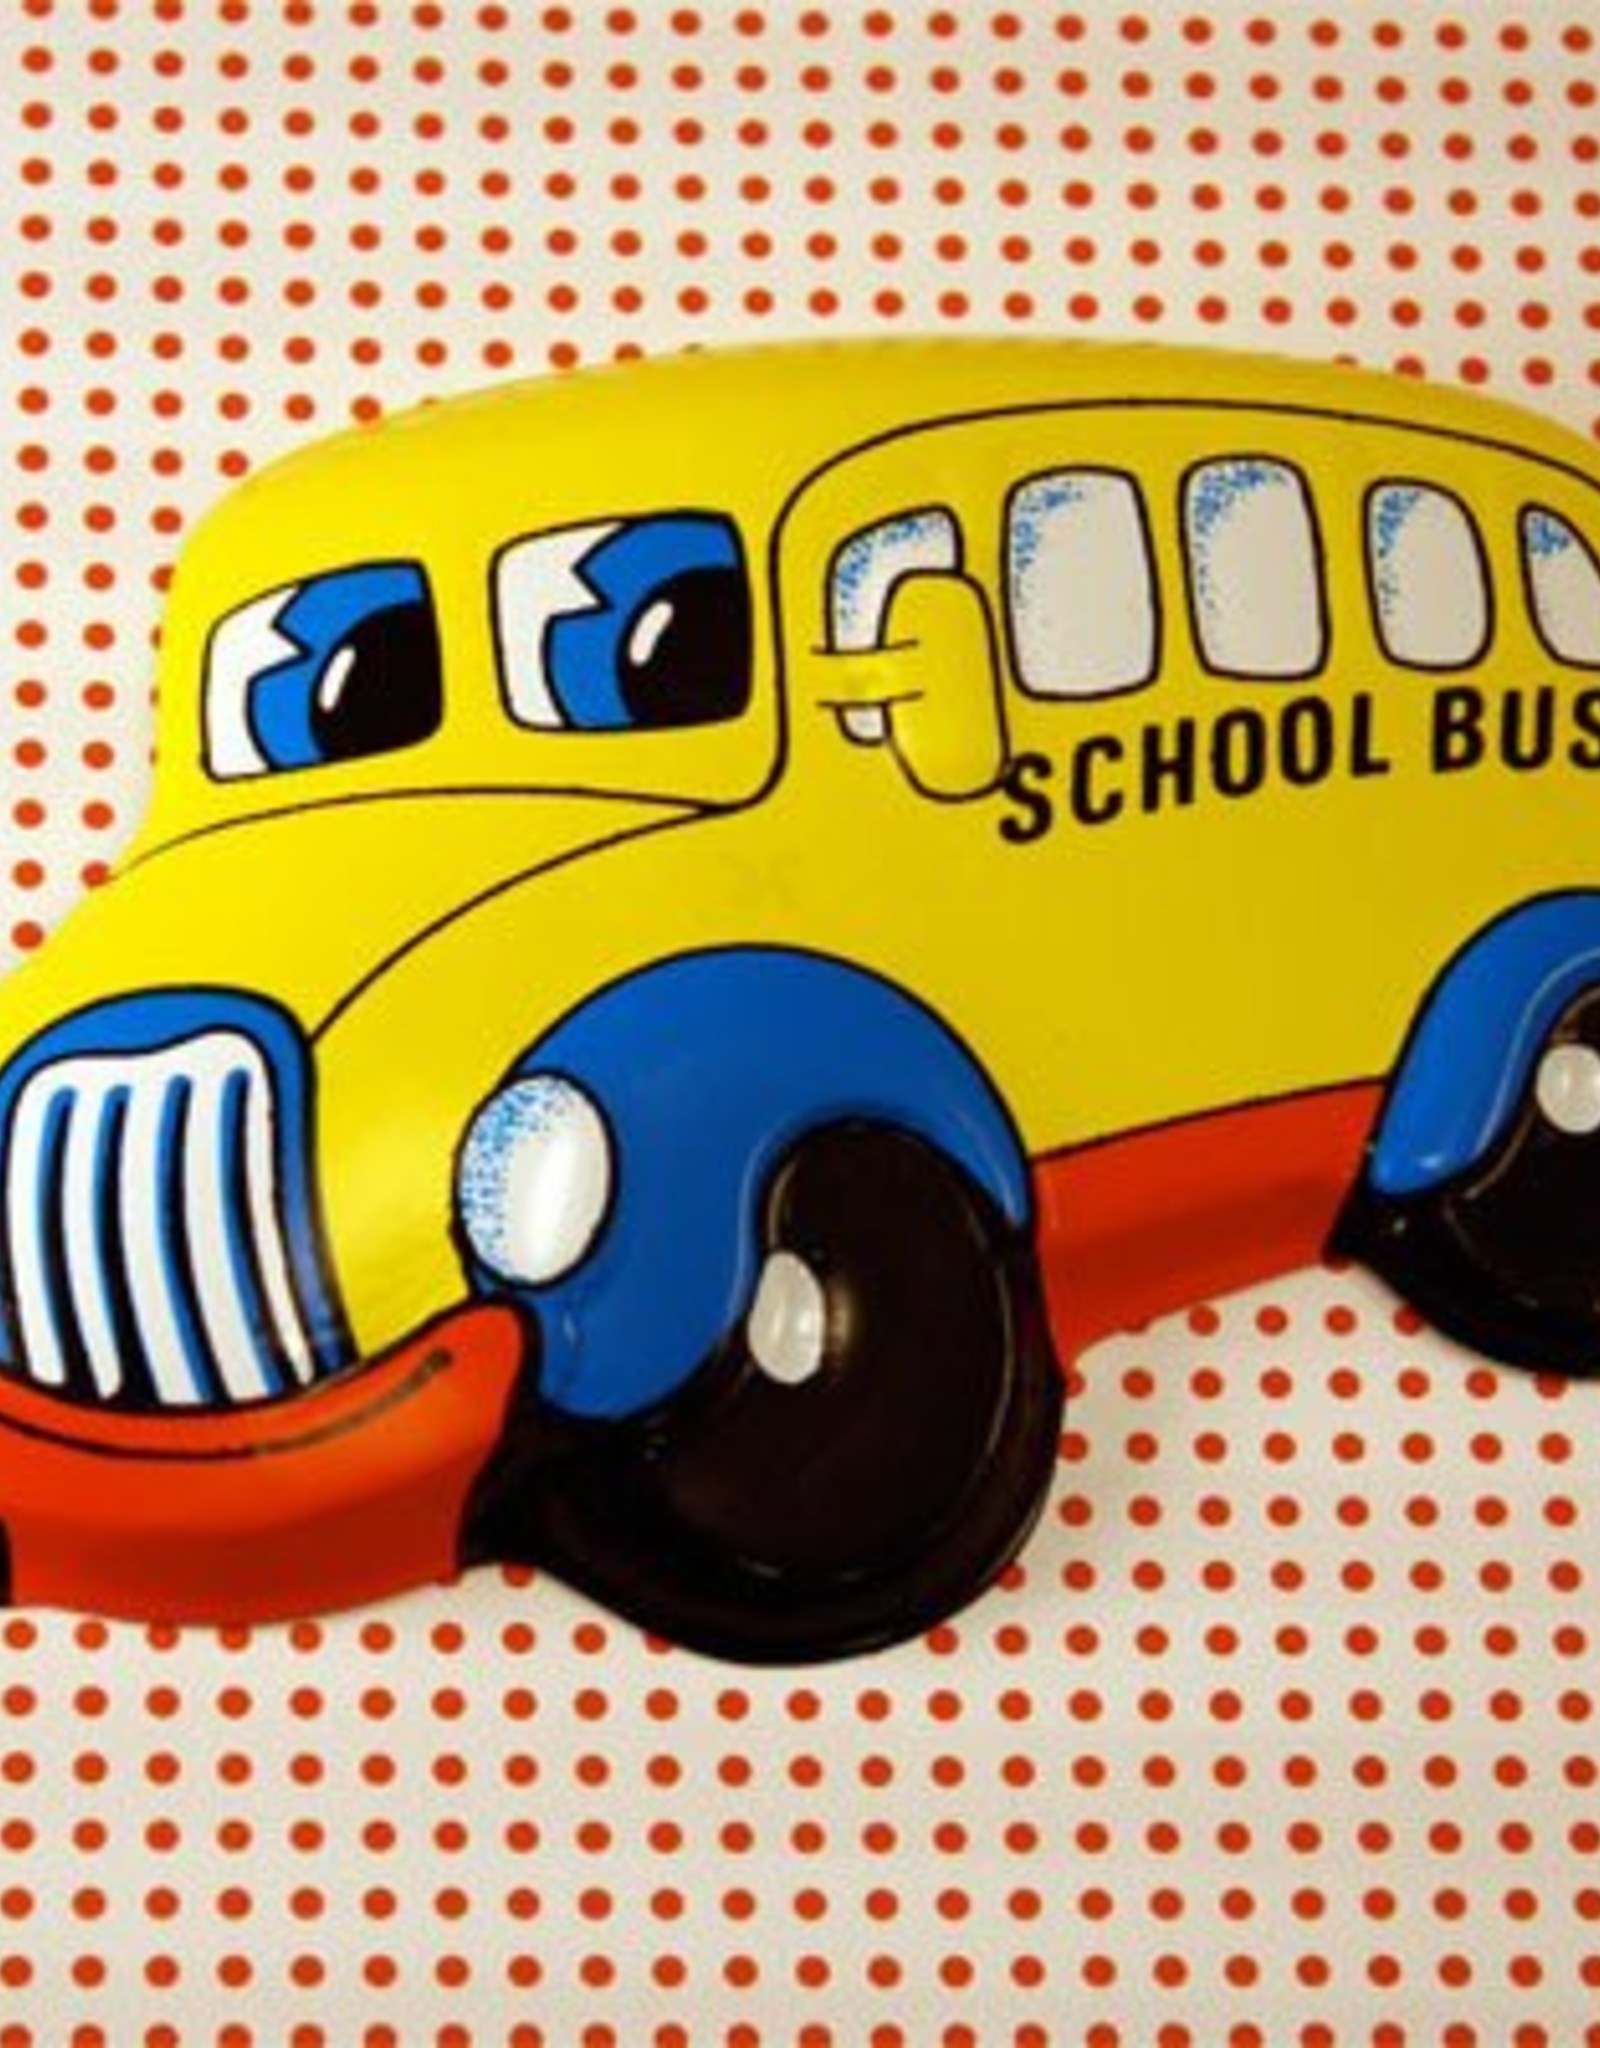 School Bus Cake Topper - Sweet Baking Supply